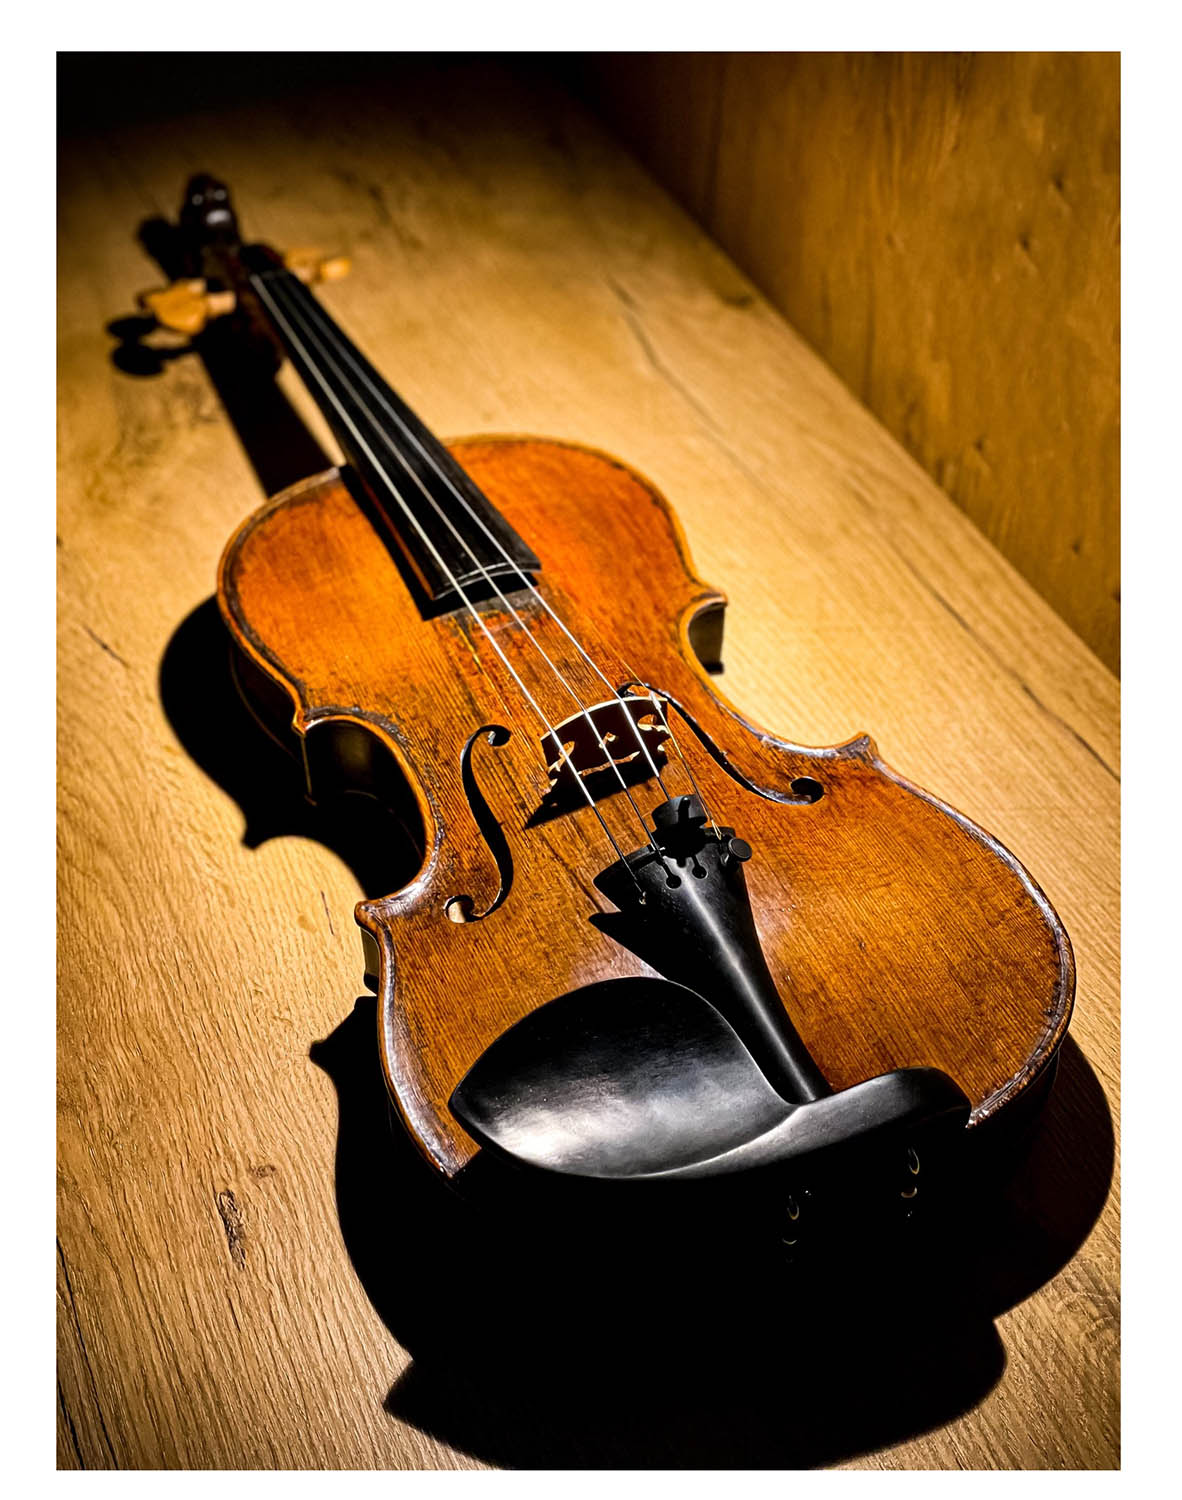 Guarneri Kinnhalter Violine Ebenholz, ZK-4258